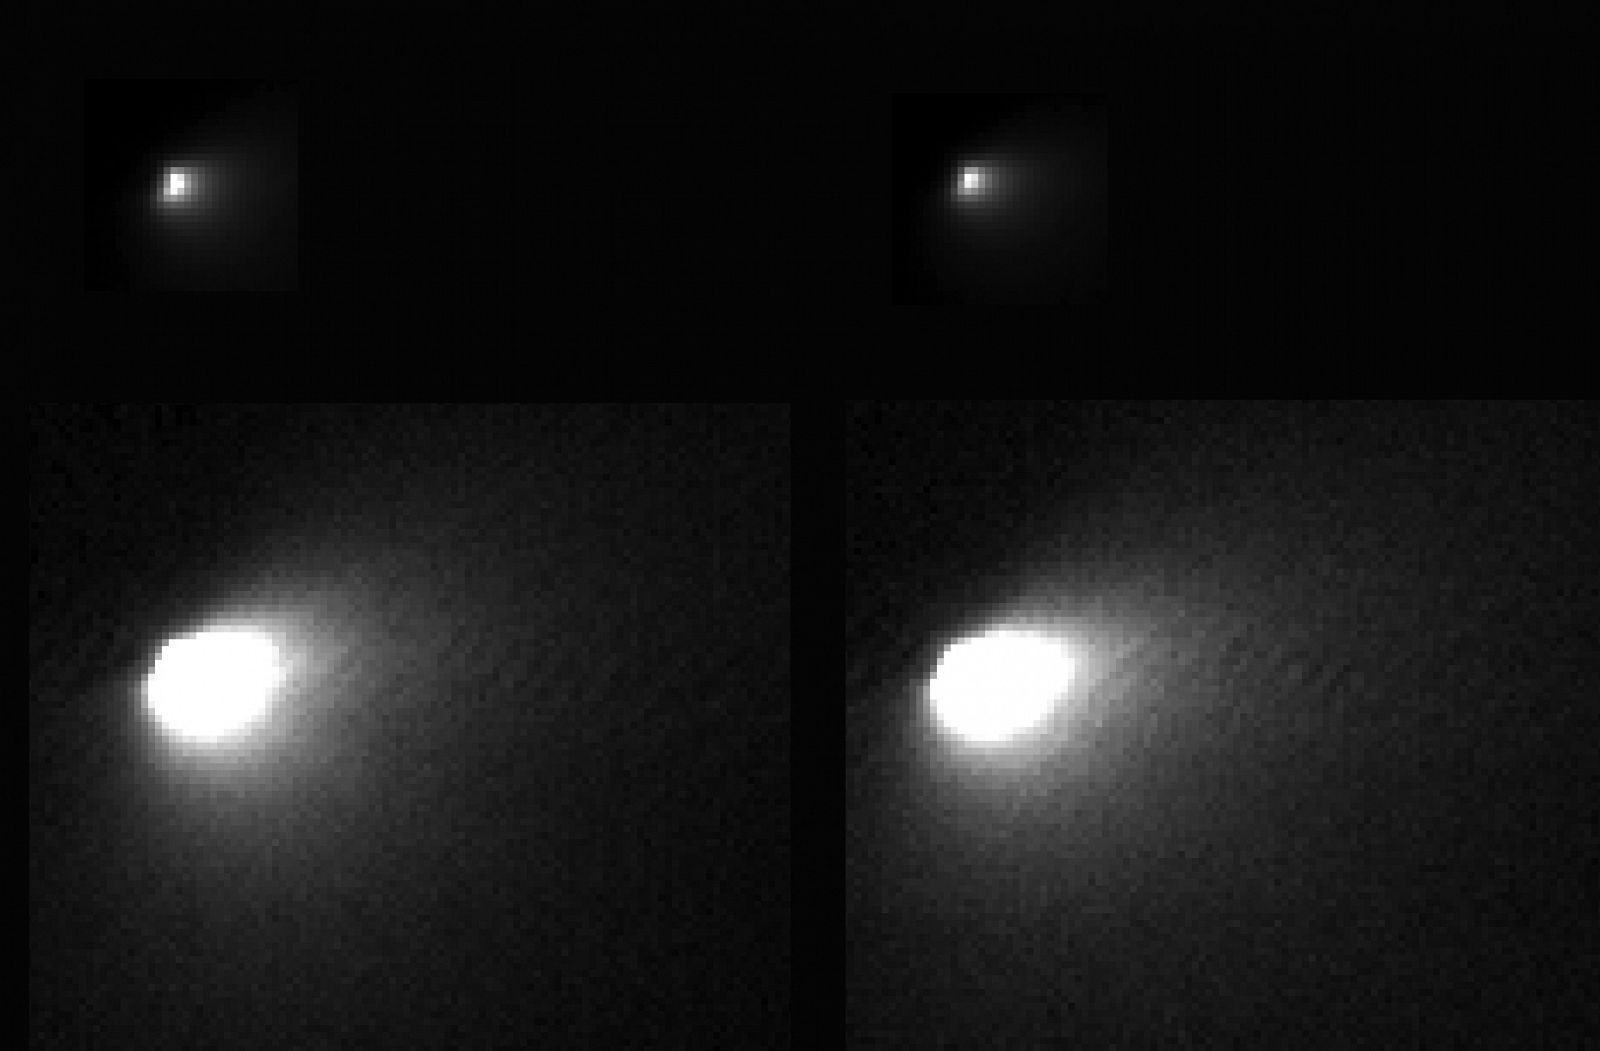 Imágenes tomadas por la sonda Mars Reconnaissance Orbiter de la NASA del cometa Siding Spring.